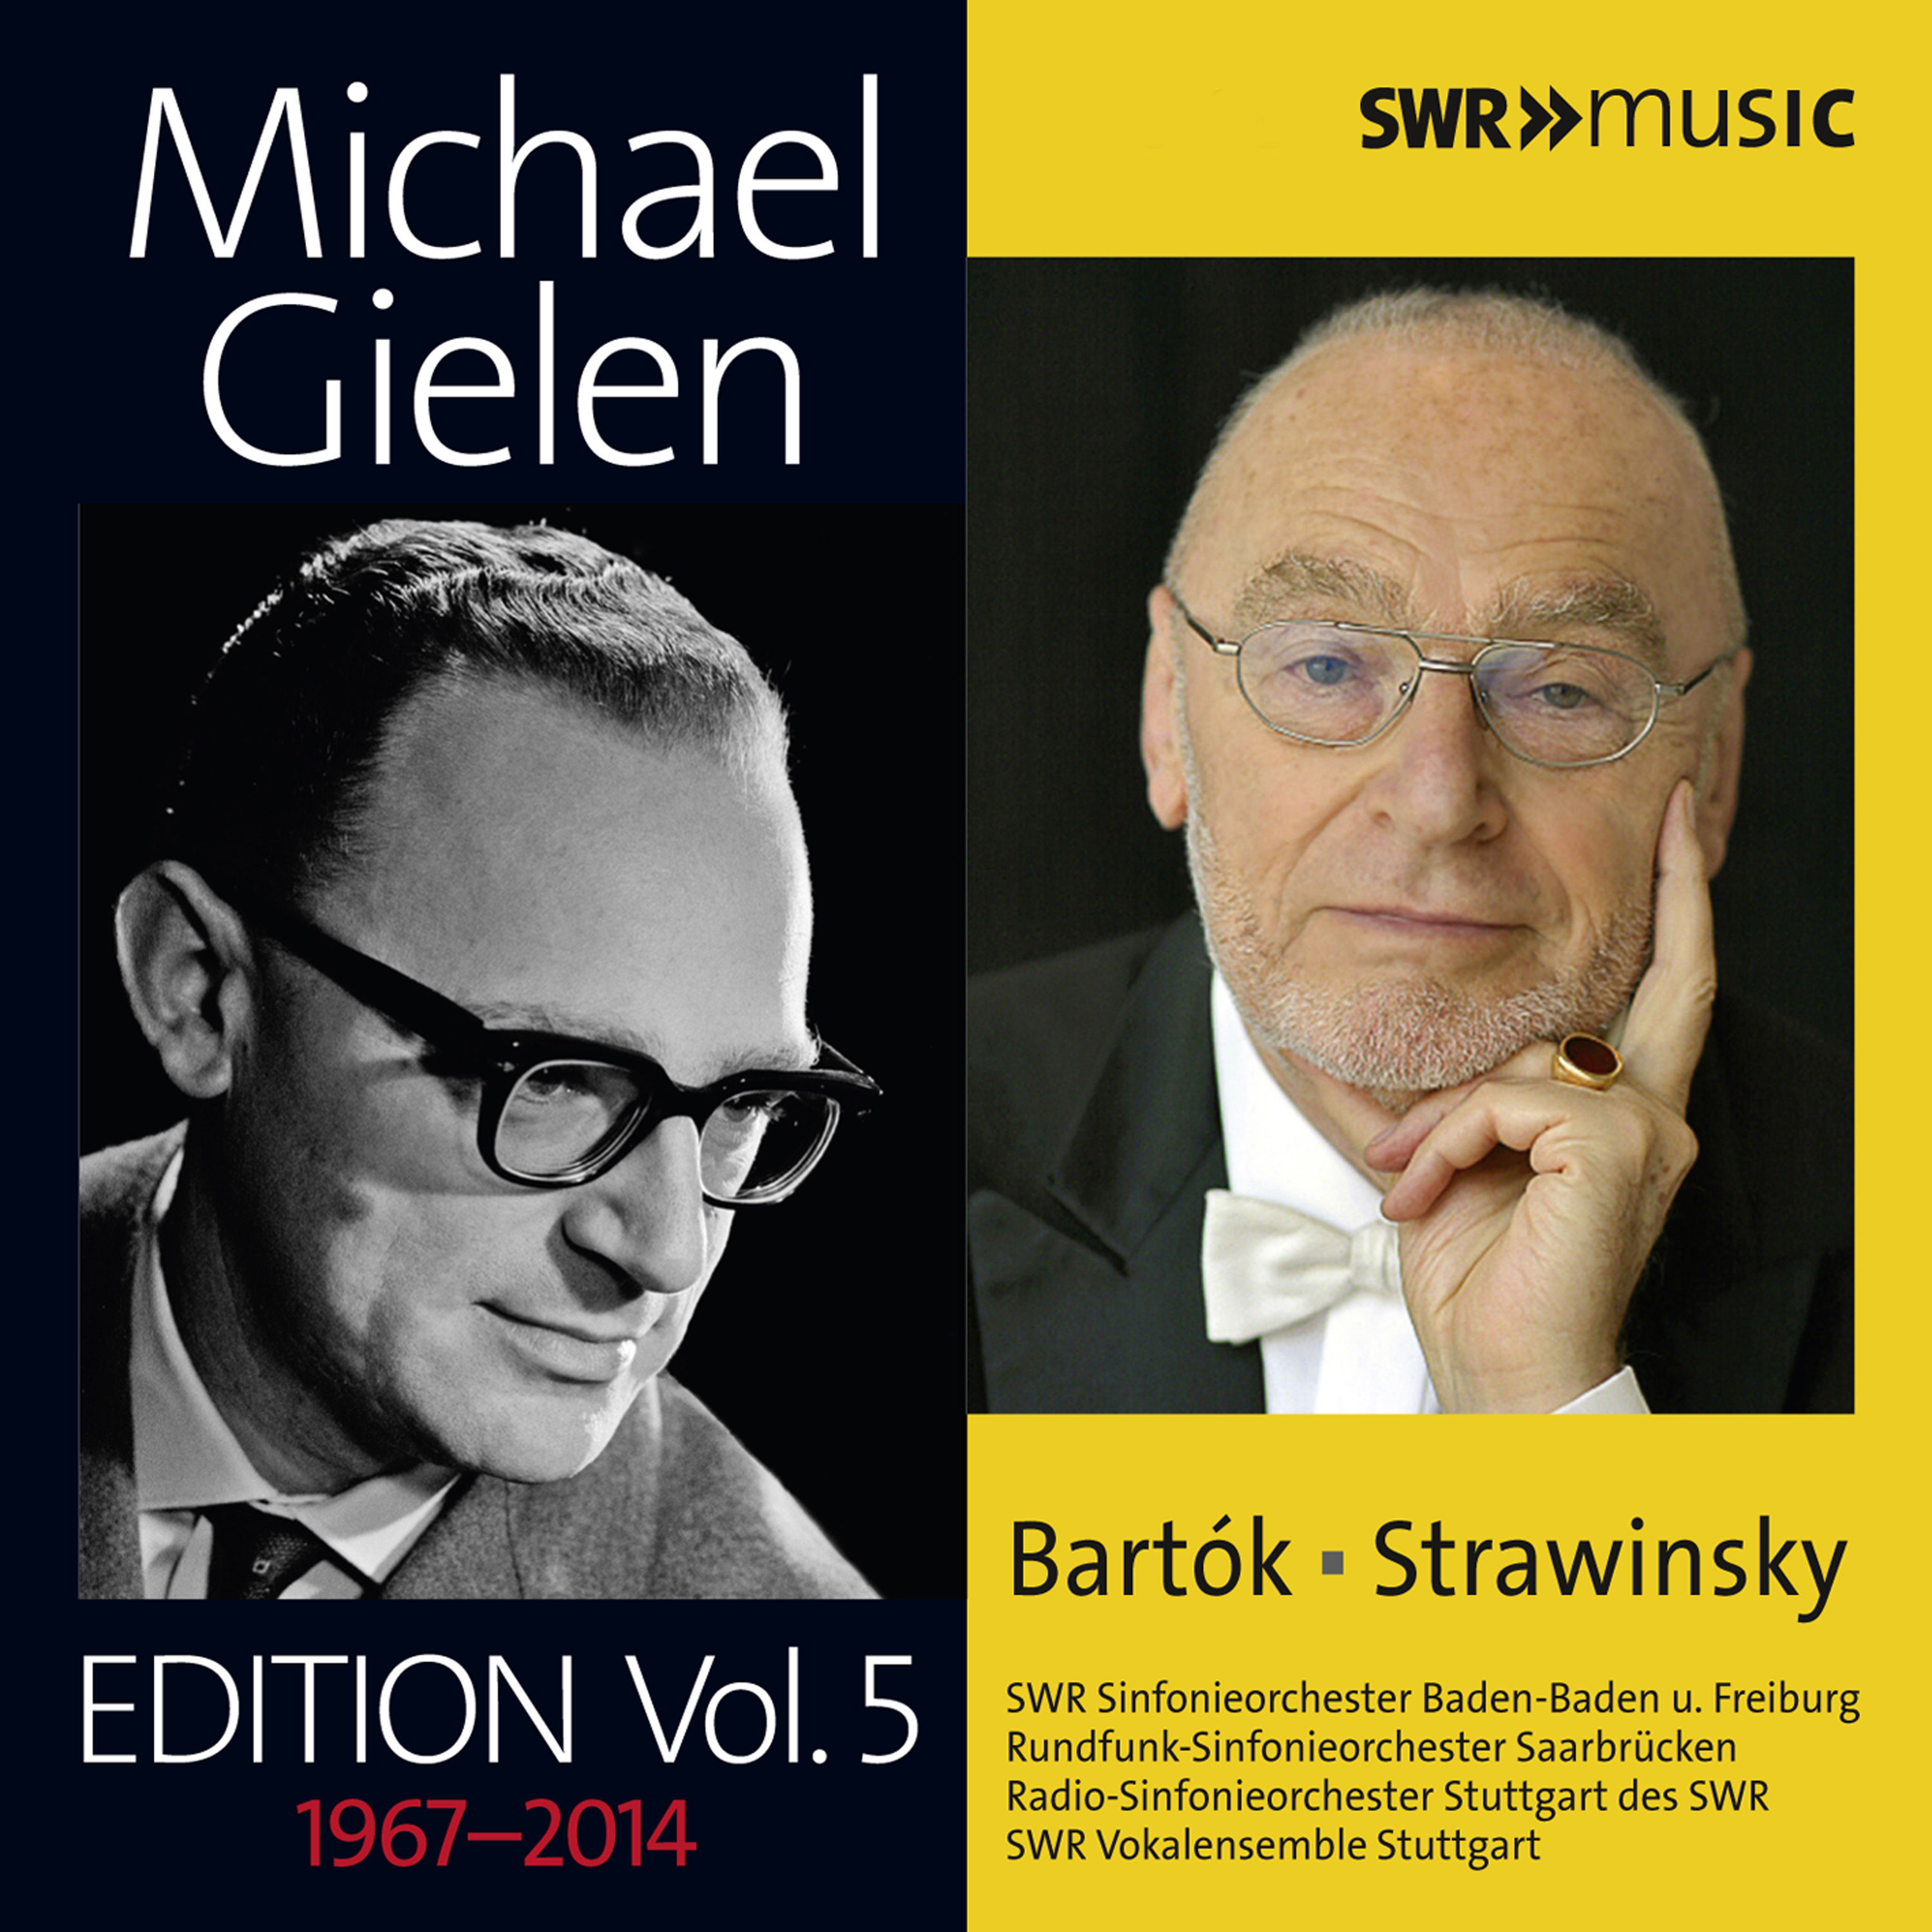 SWR Sinfonieorchester - Michael Gielen Edition Vol. 5 cd03 Bartok Strawinsky